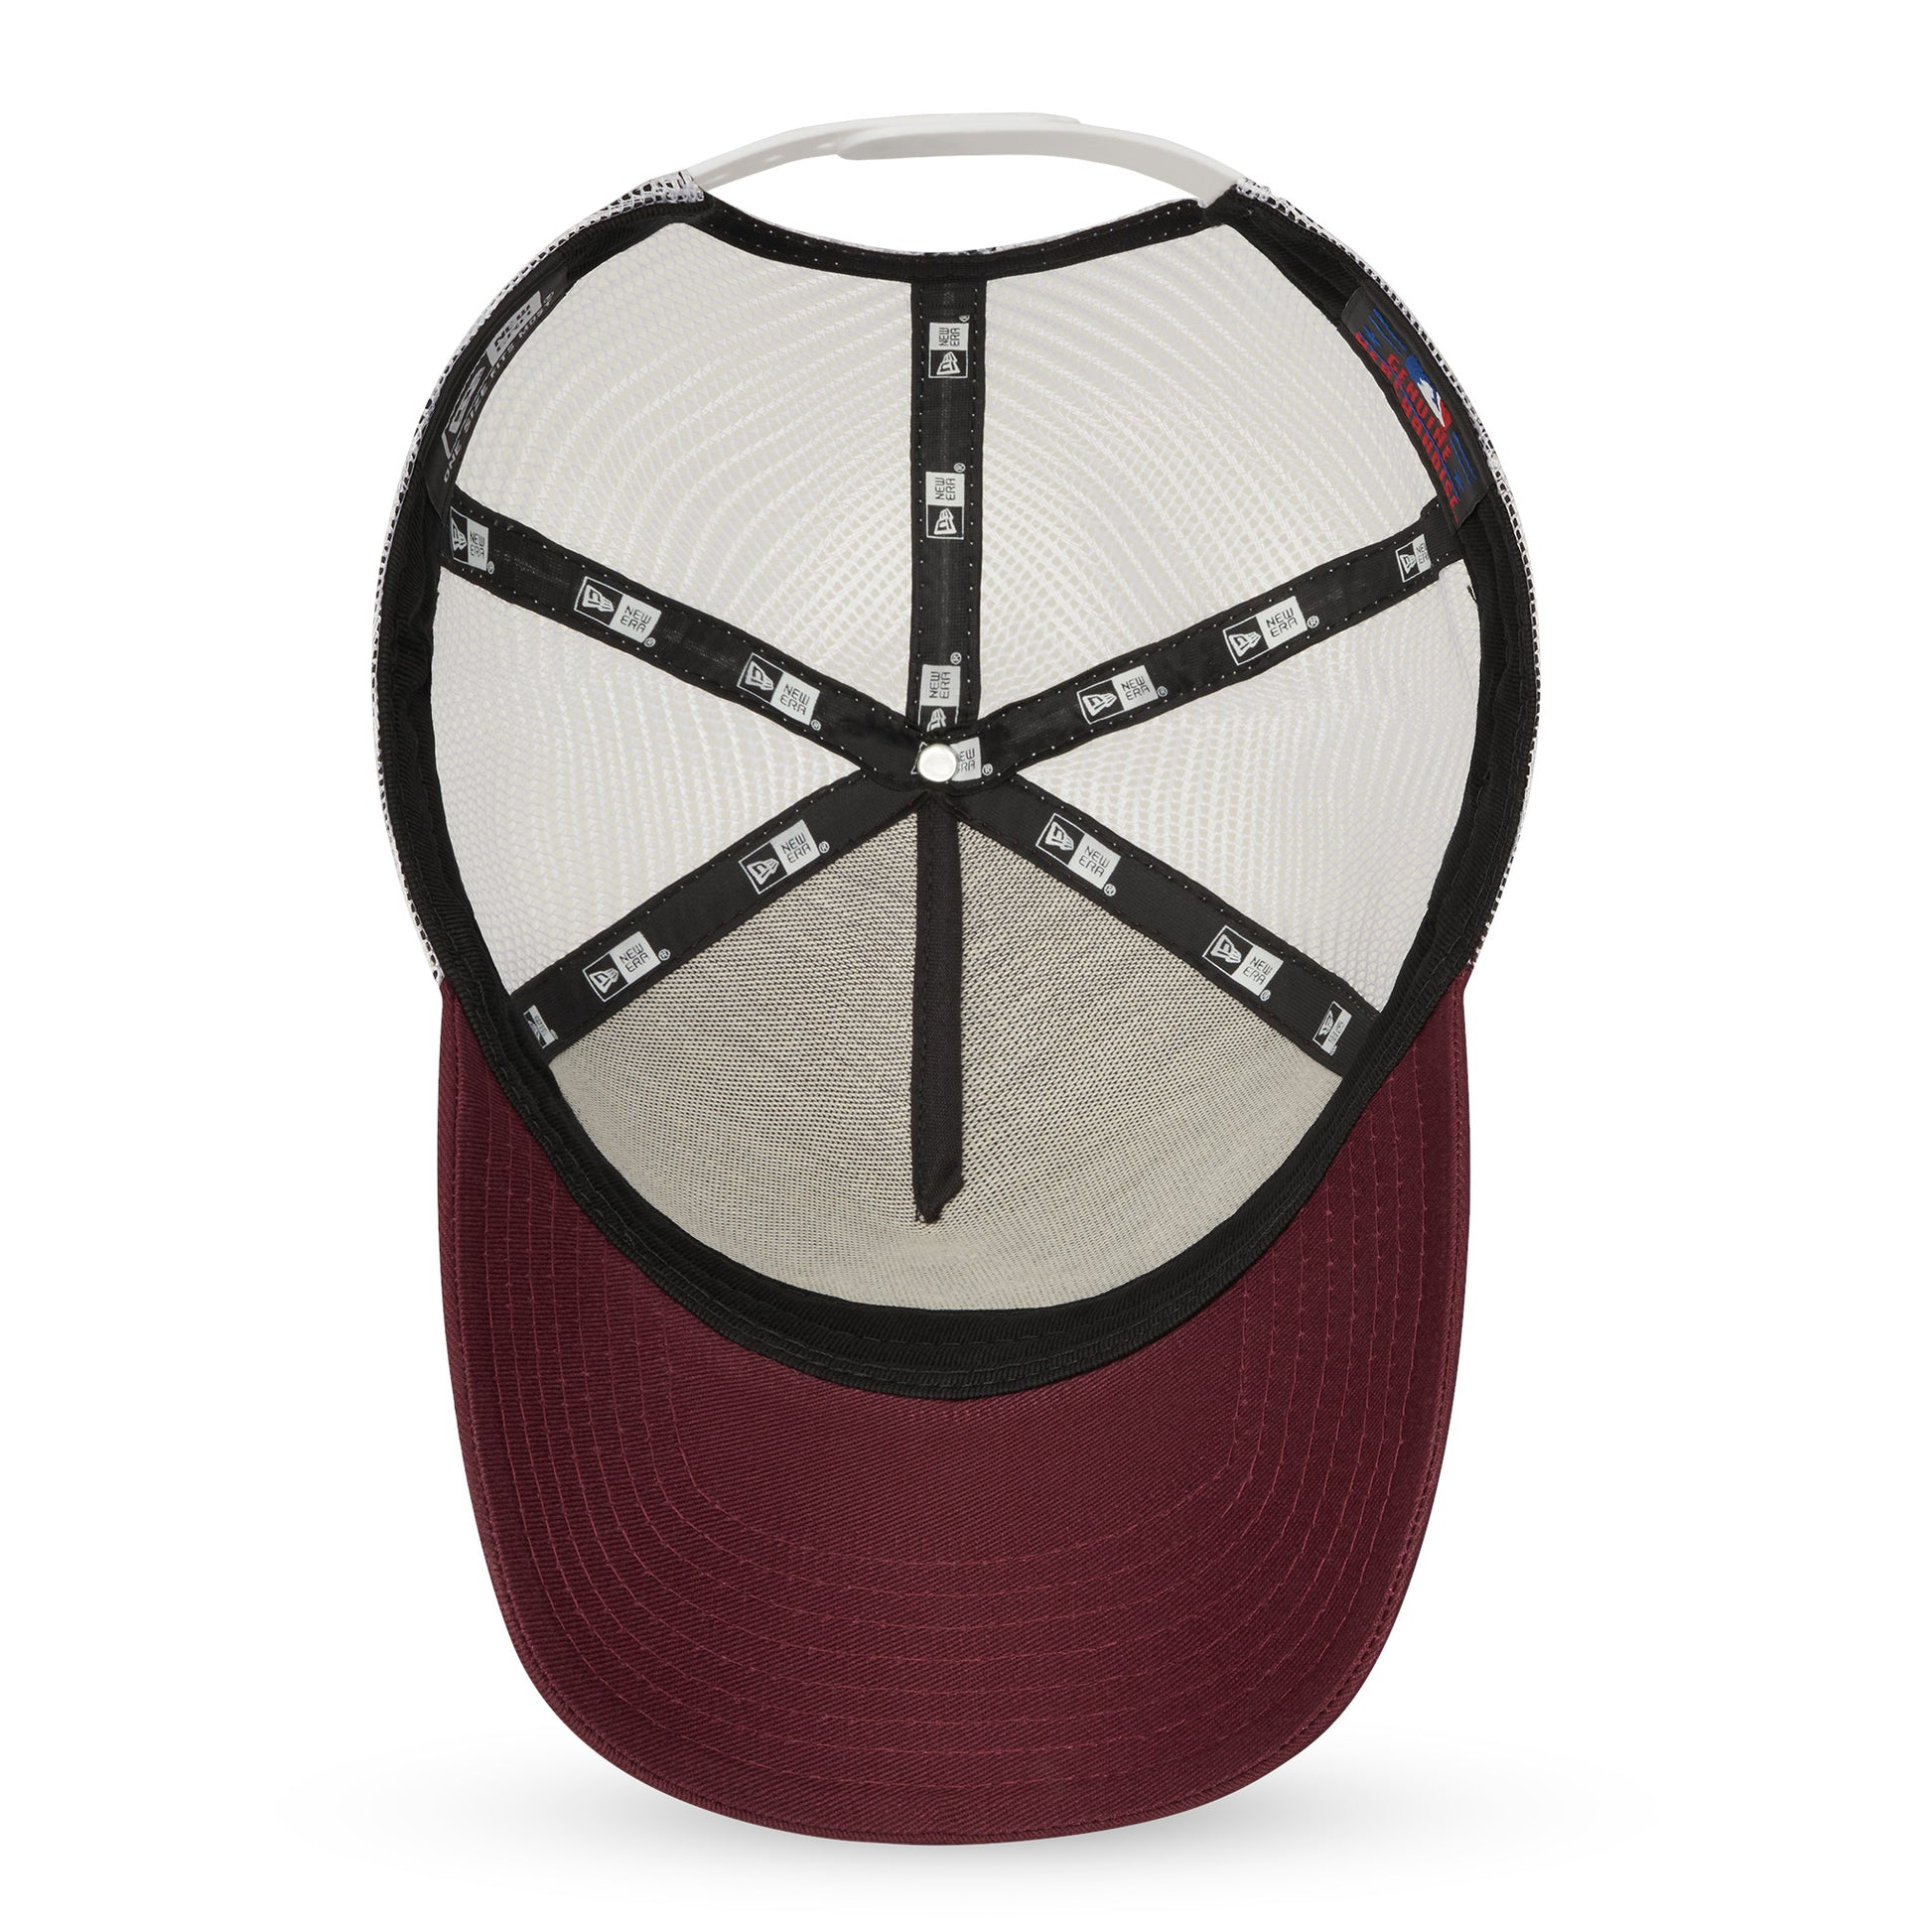 New York Yankees League Essentials Trucker Cap - Maroon/White - Headz Up 